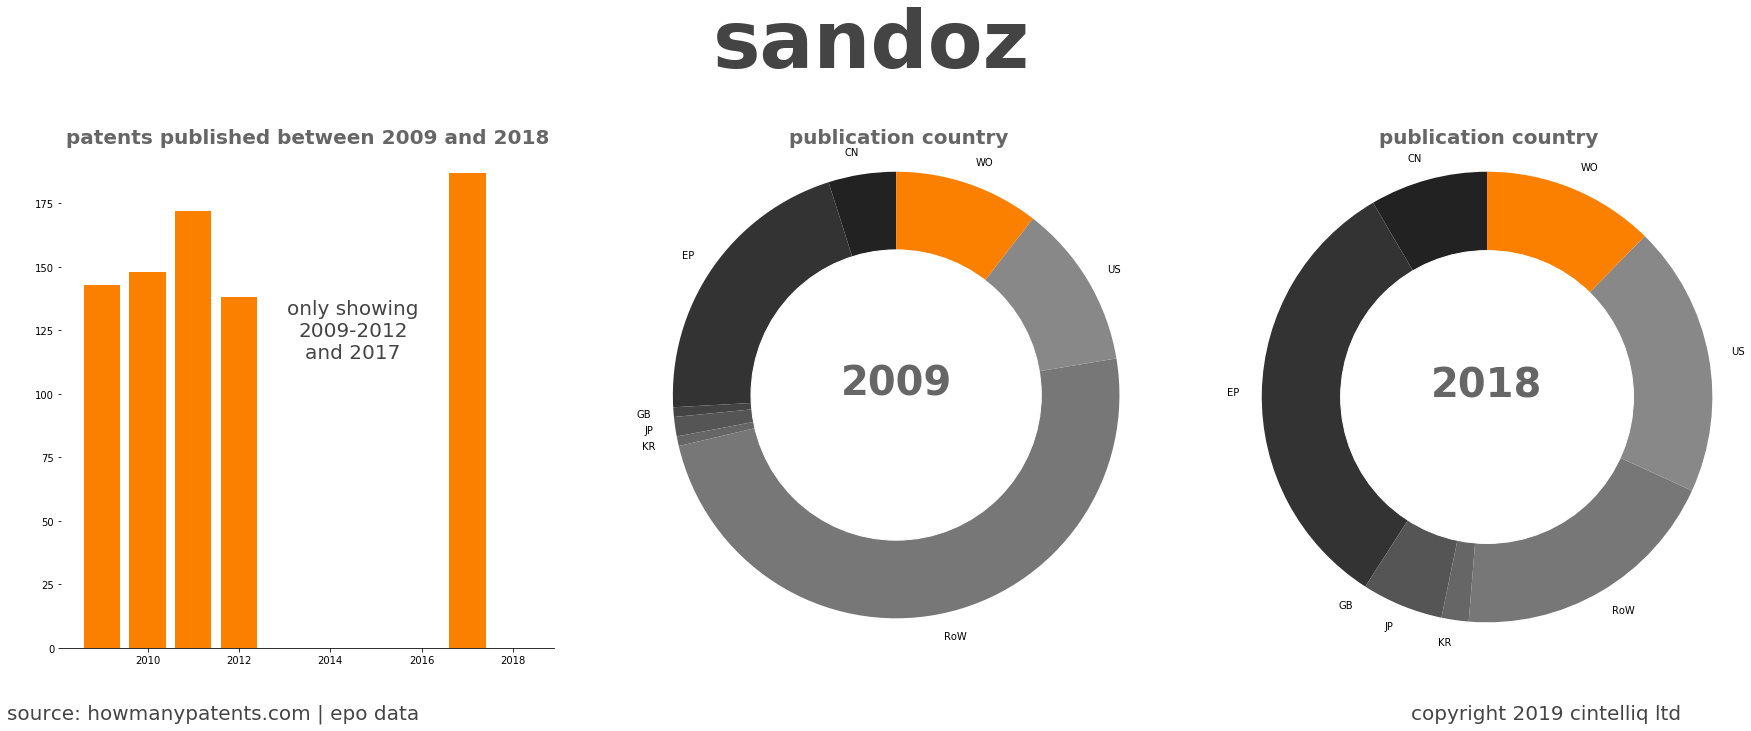 summary of patents for Sandoz